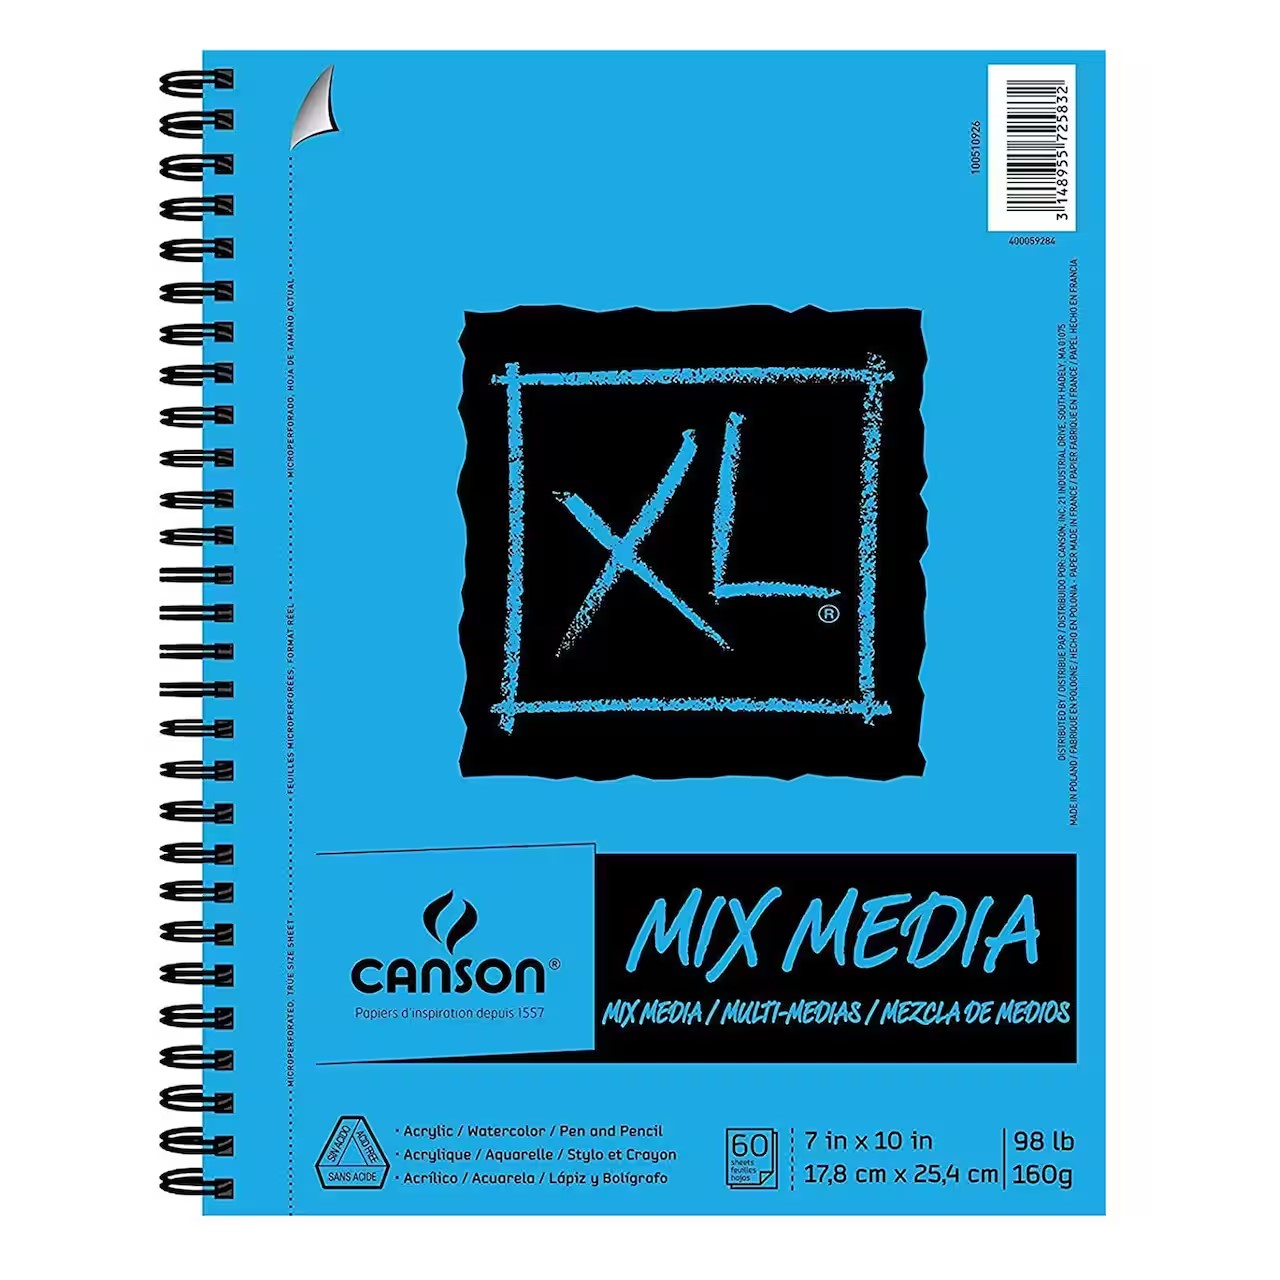 7"x10" Canson #400064141 Mix Media Pad: 30 sheets